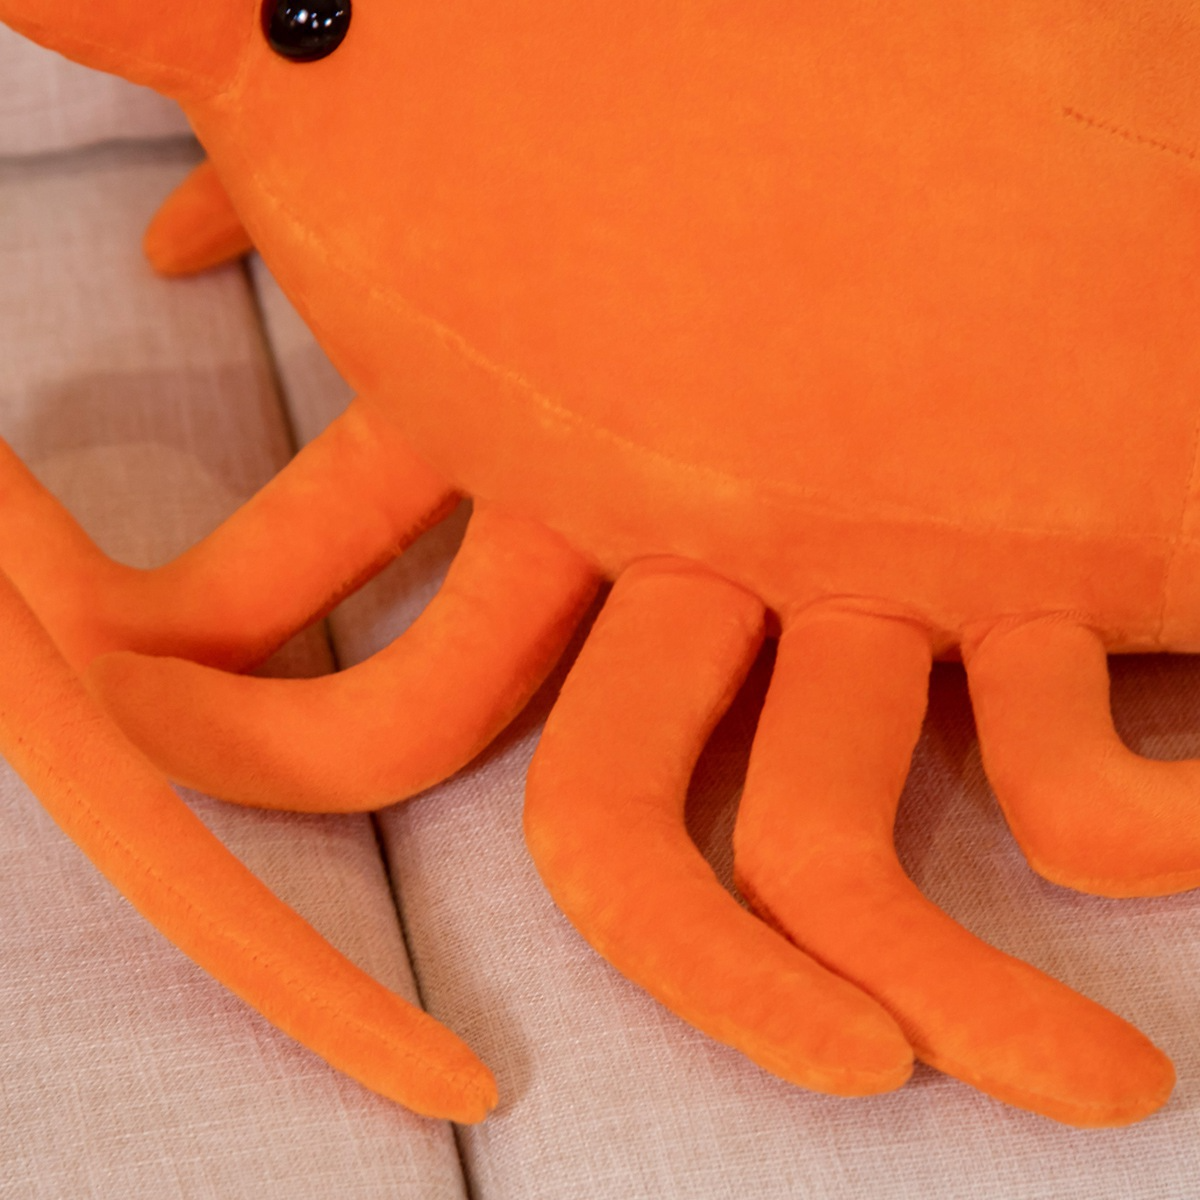 Orange Lobster Soft Stuffed Plush Toy